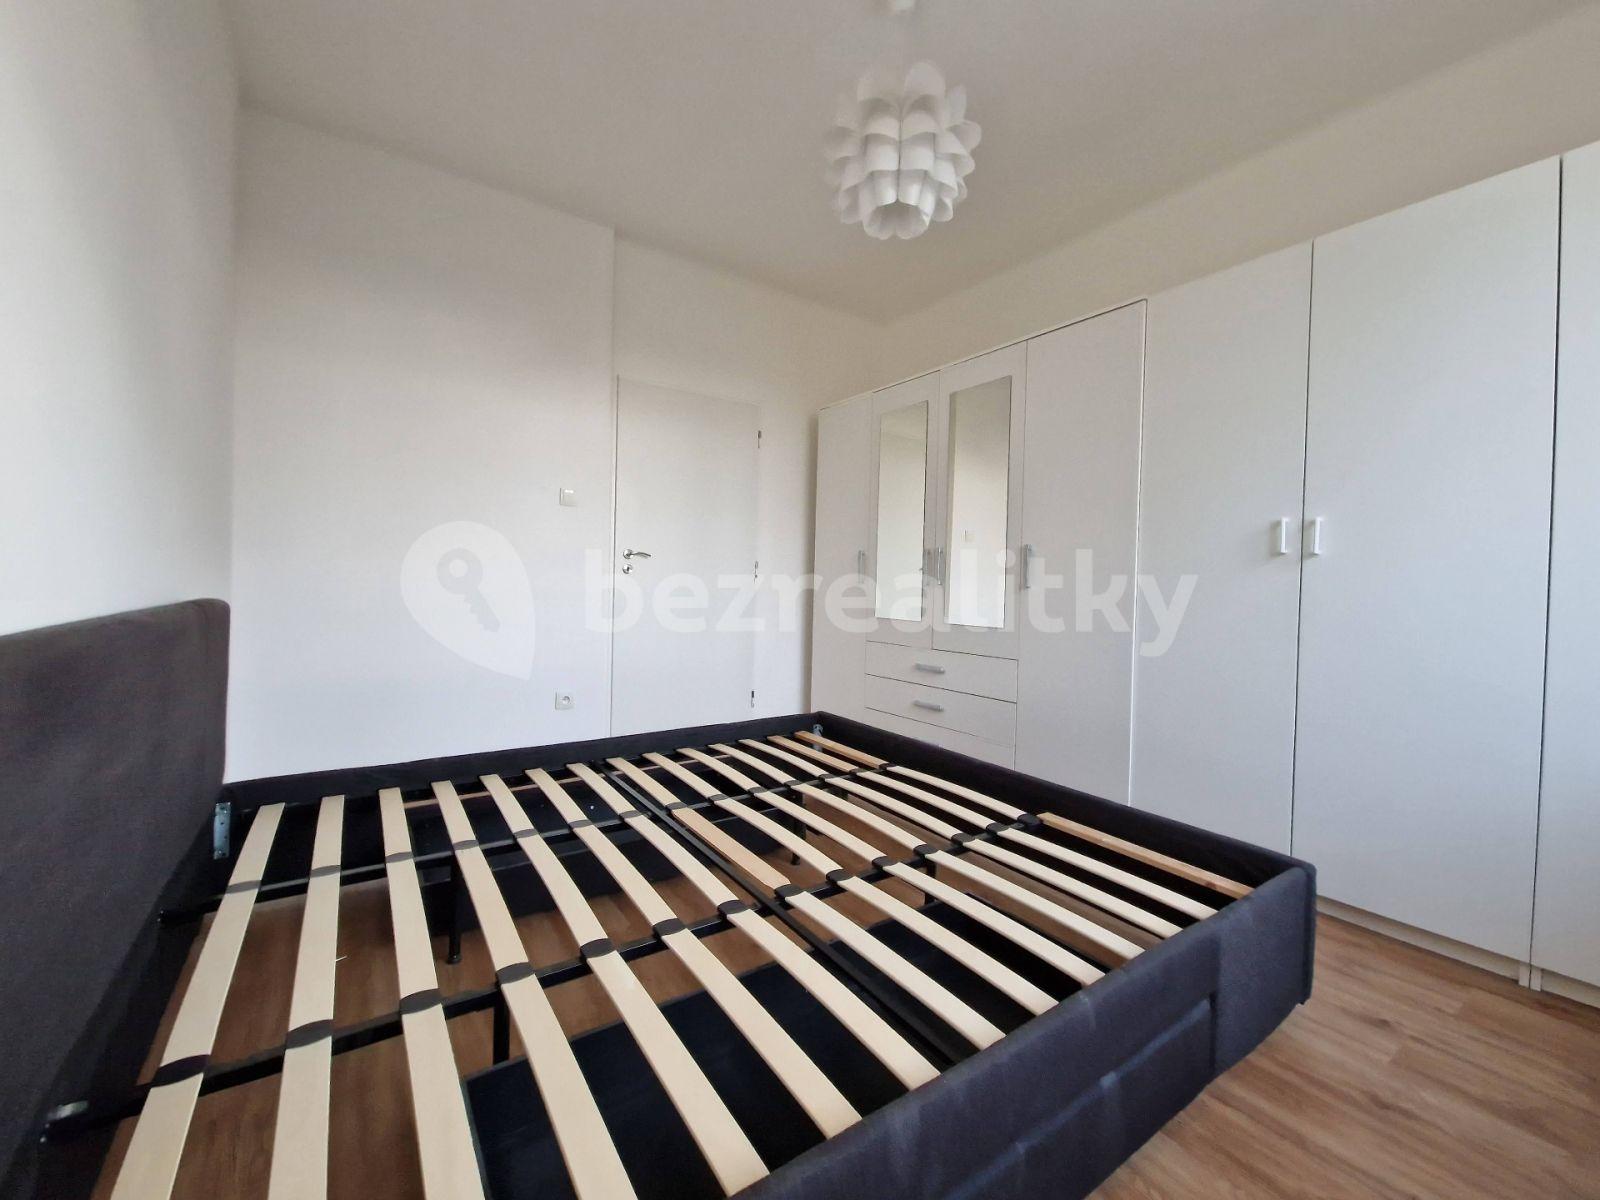 2 bedroom flat to rent, 50 m², U Lomů, Plzeň, Plzeňský Region